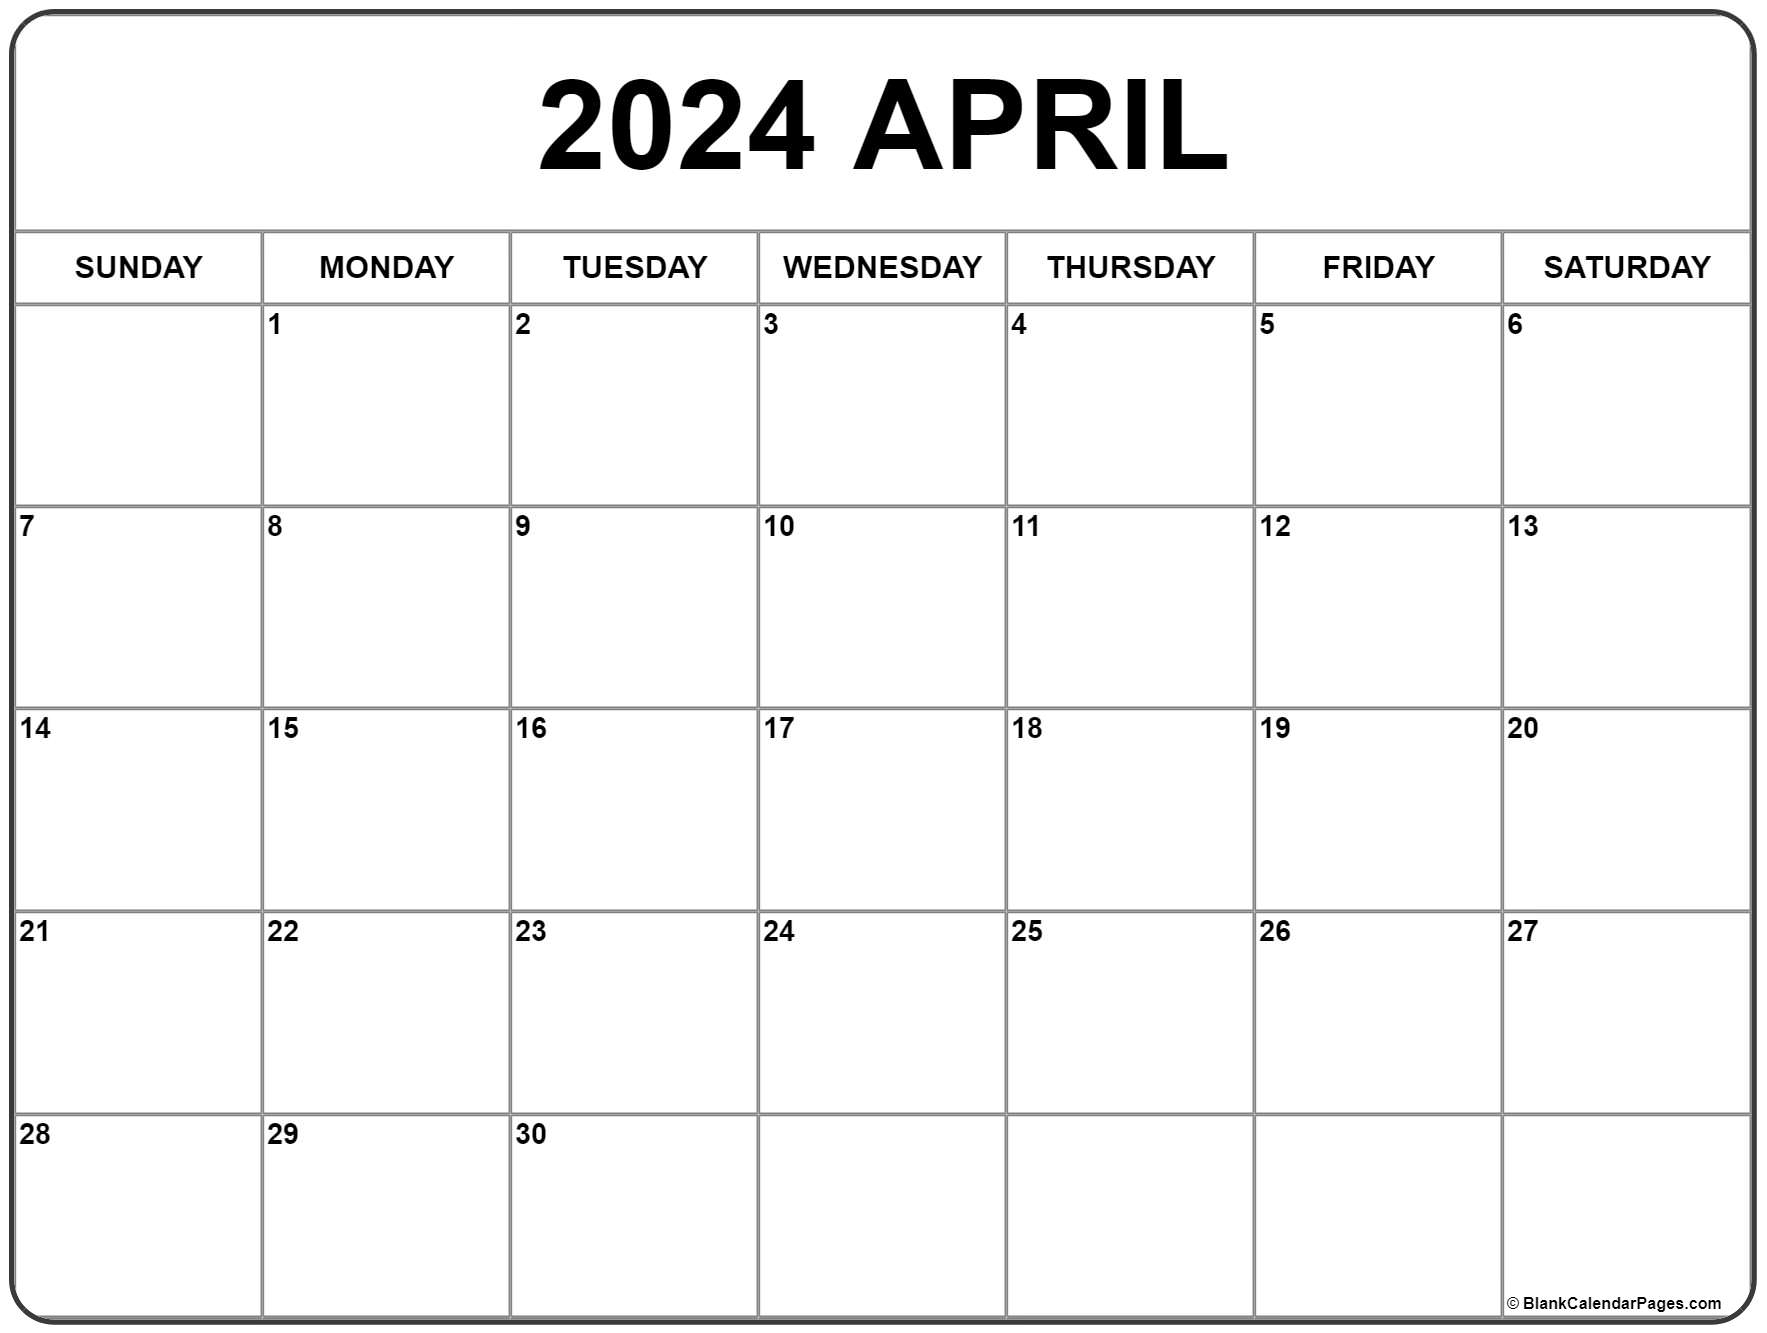 April 2024 Calendar | Free Printable Calendar inside Calendar For Month Of April 2024